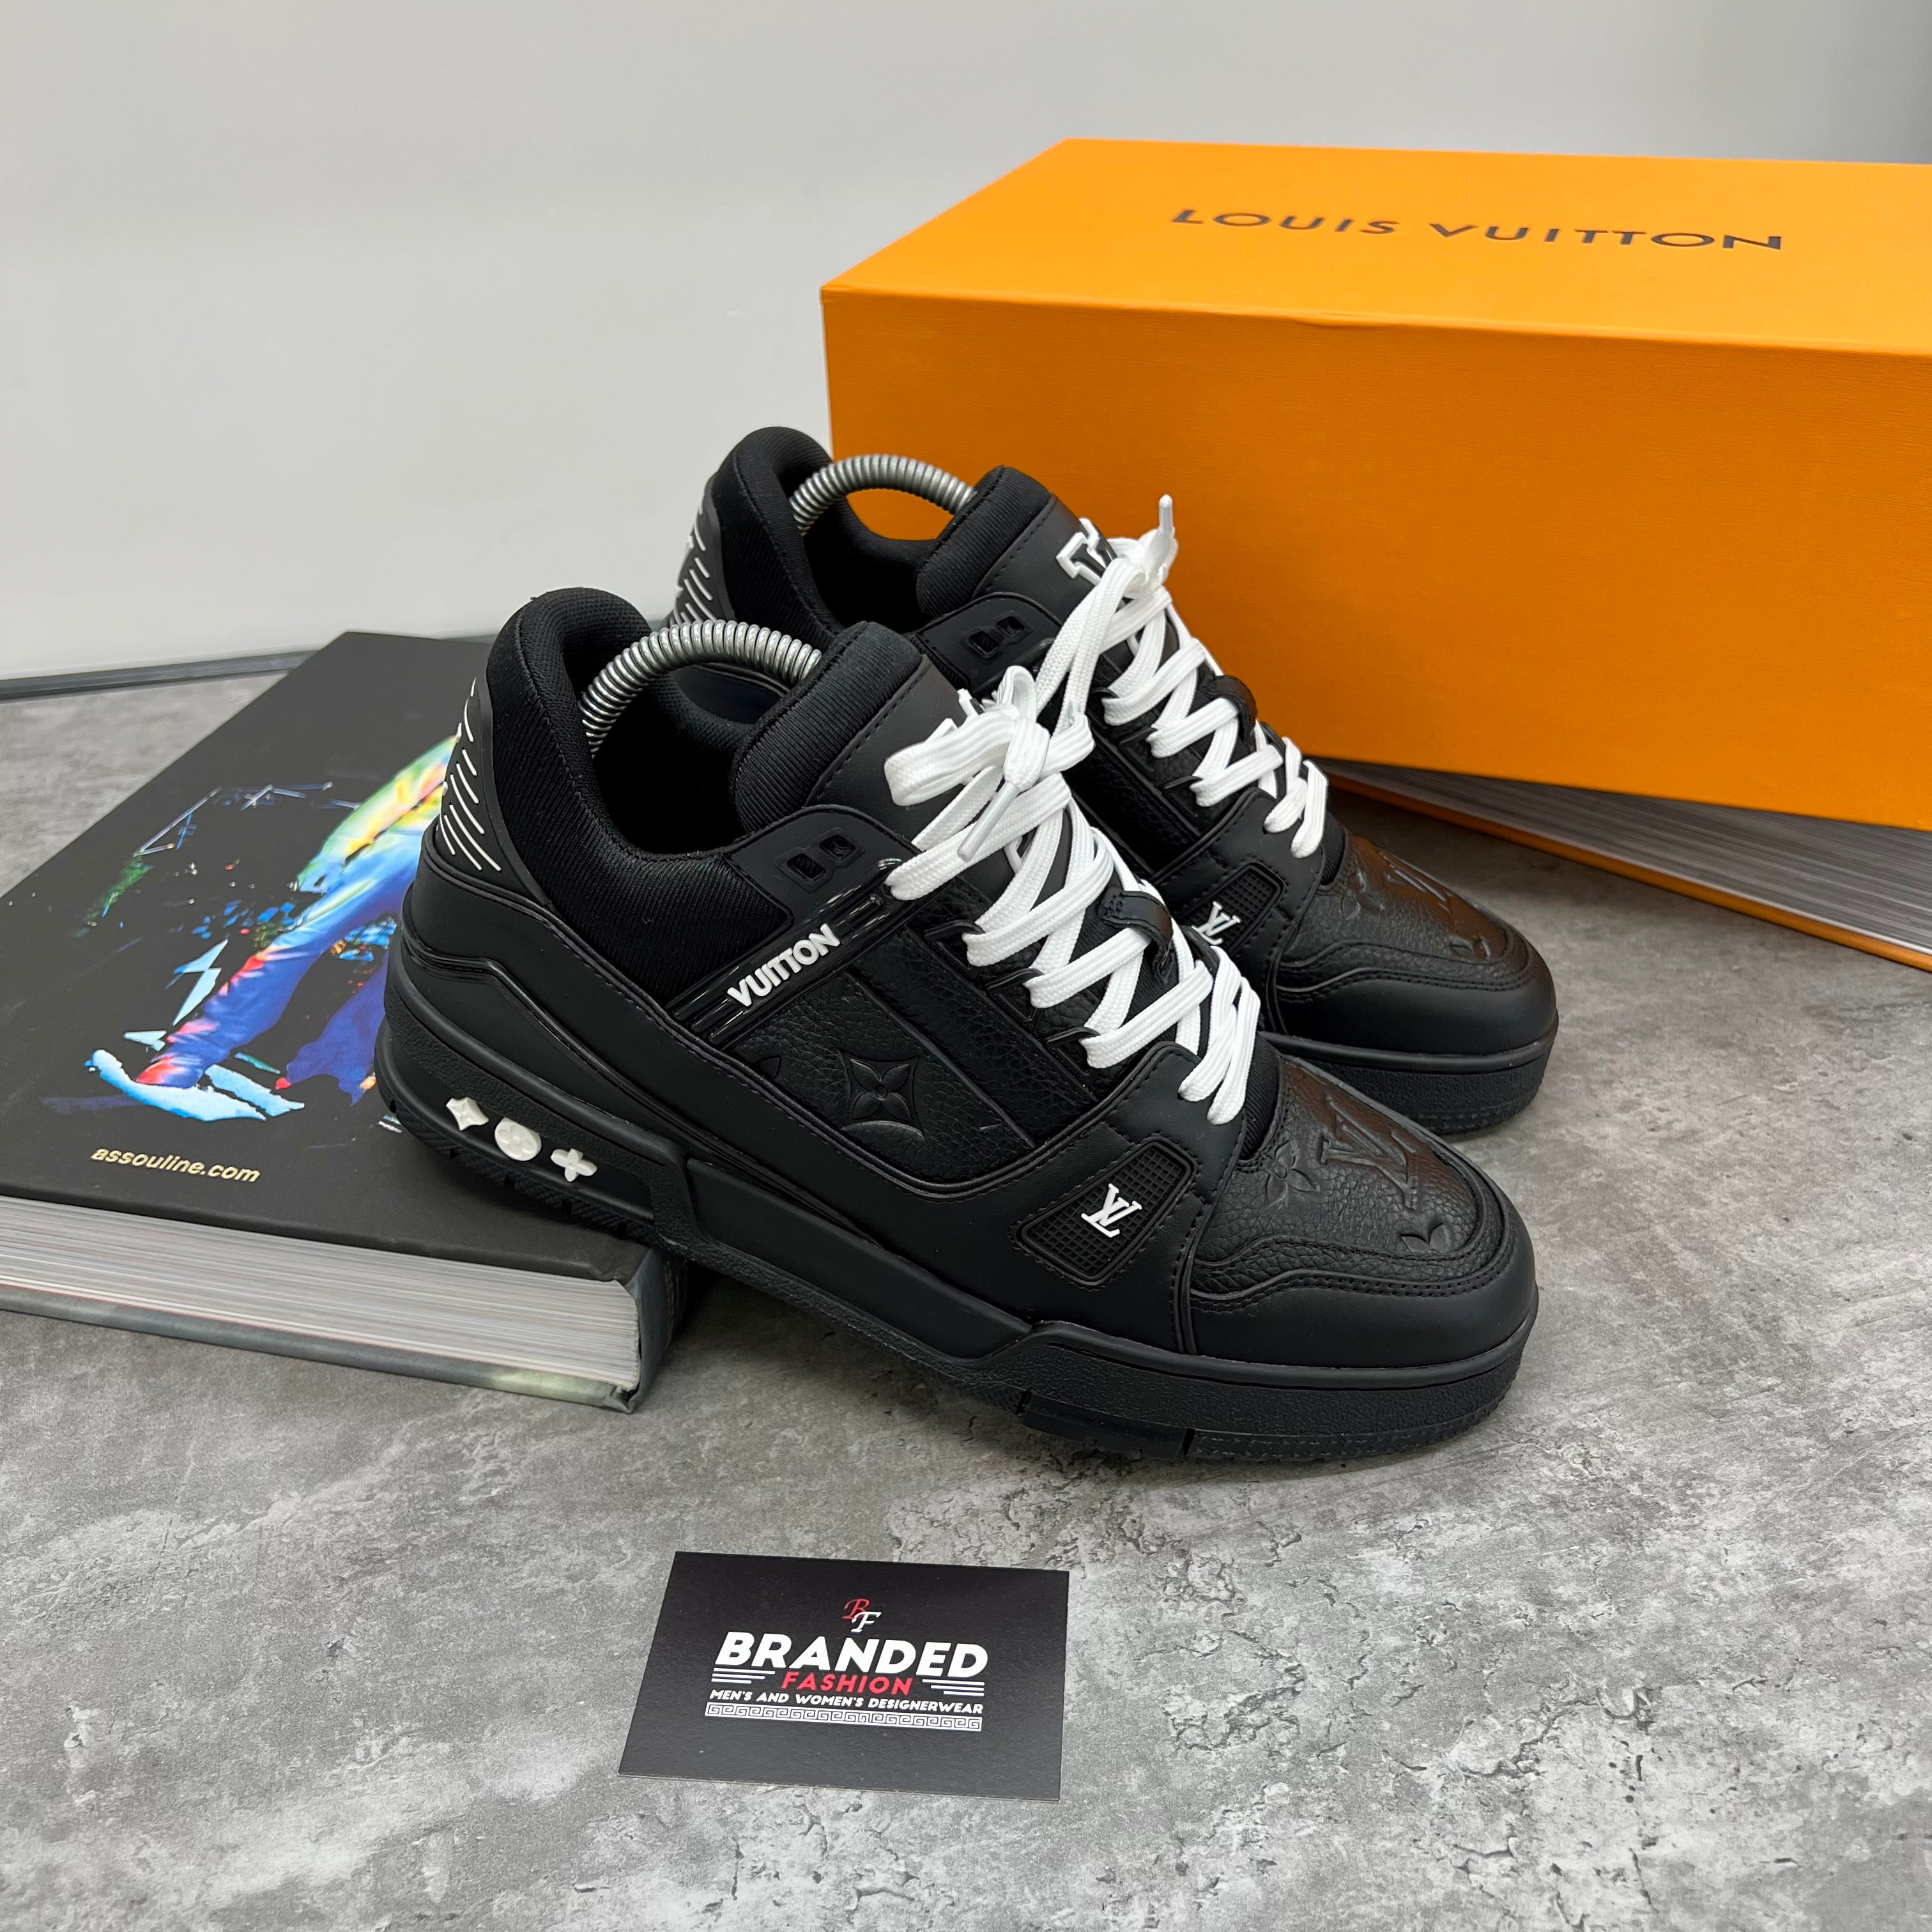 Louis Vuitton Trainer Sneakers (Black)